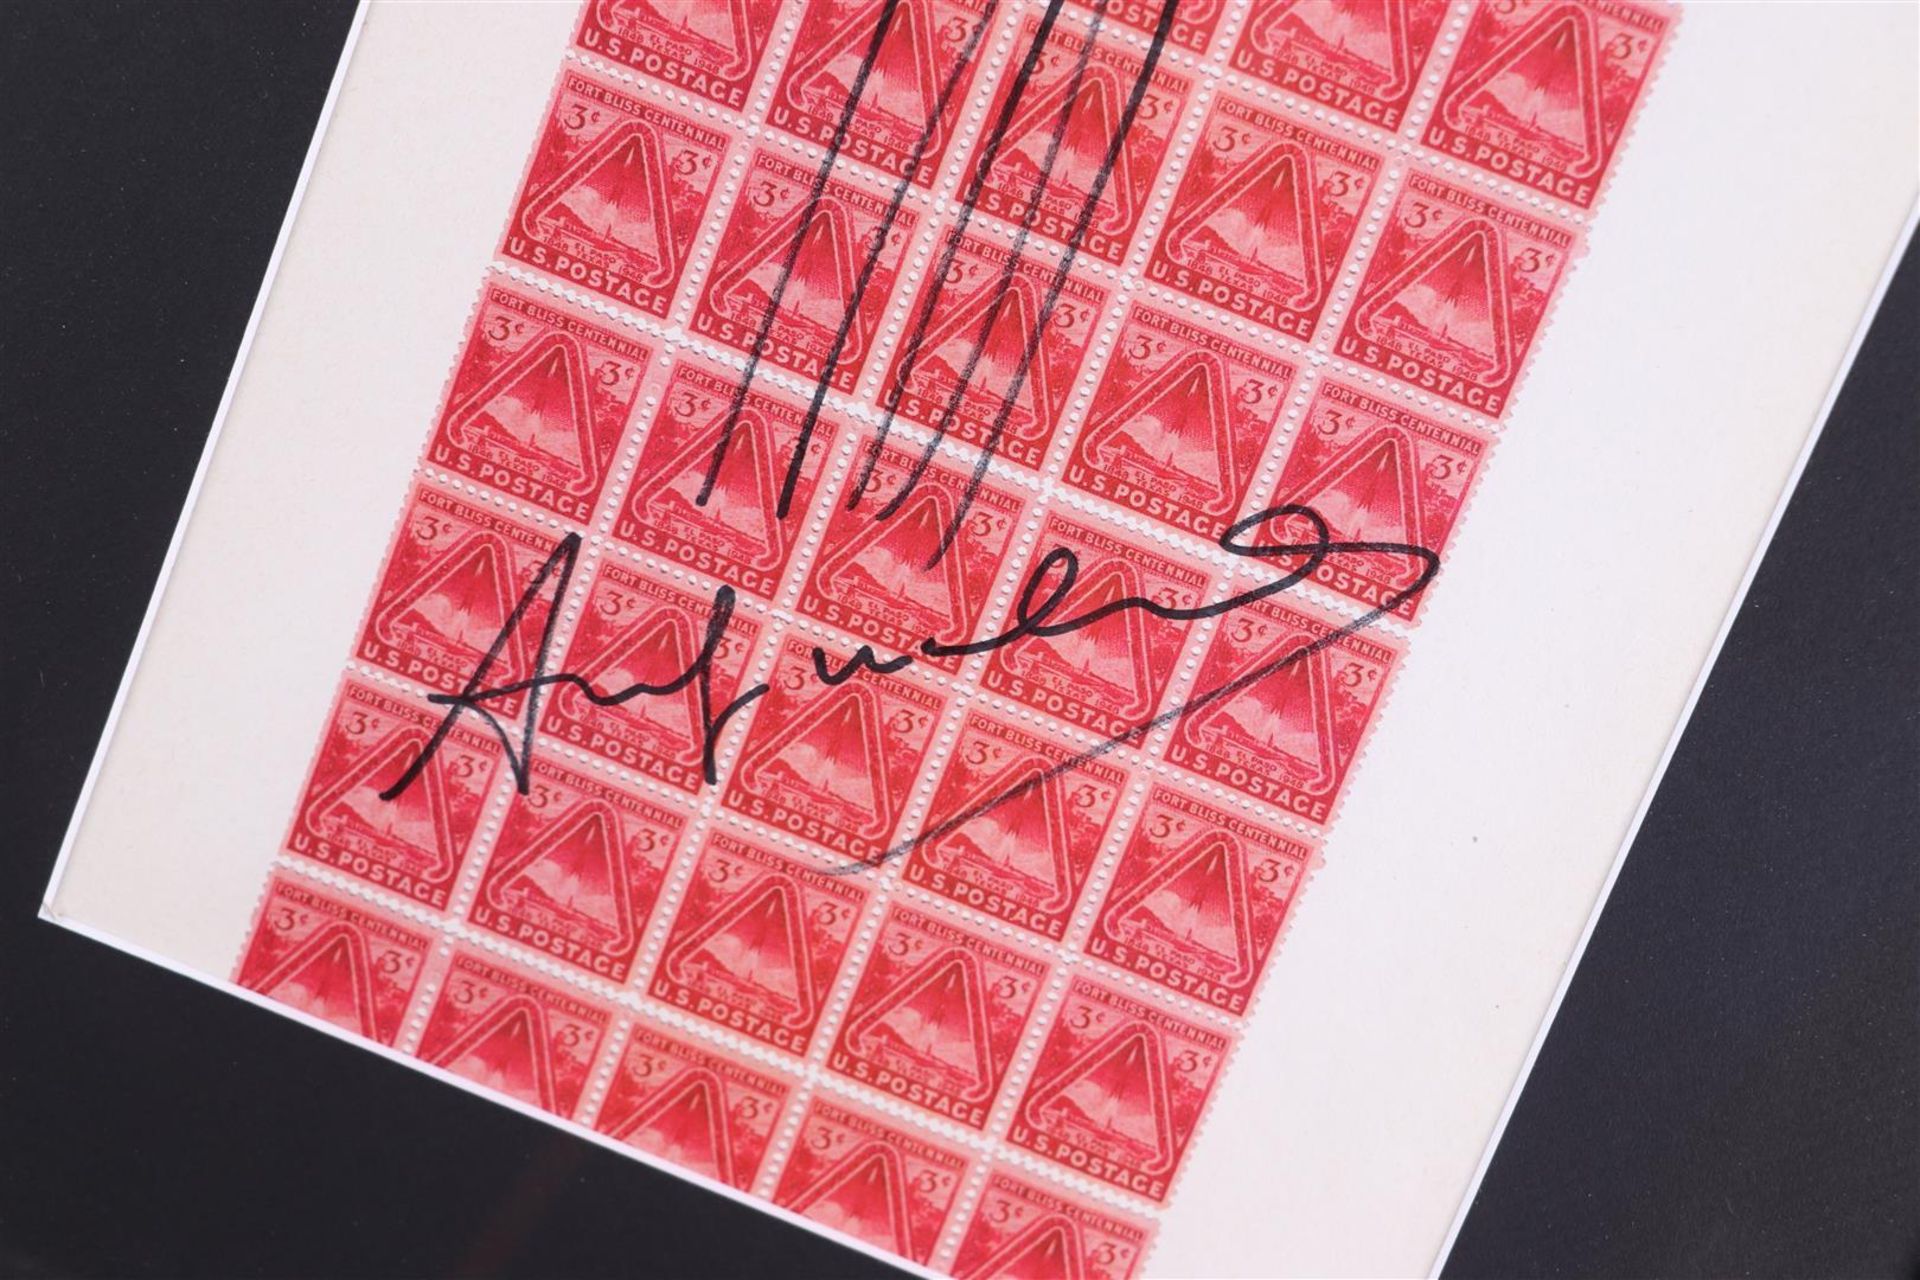 Andy Warhol (Pittsburgh, , 1928 - 1987 New York Presbyterian), (after), 50 U.S. Postage Stamps - Image 3 of 4